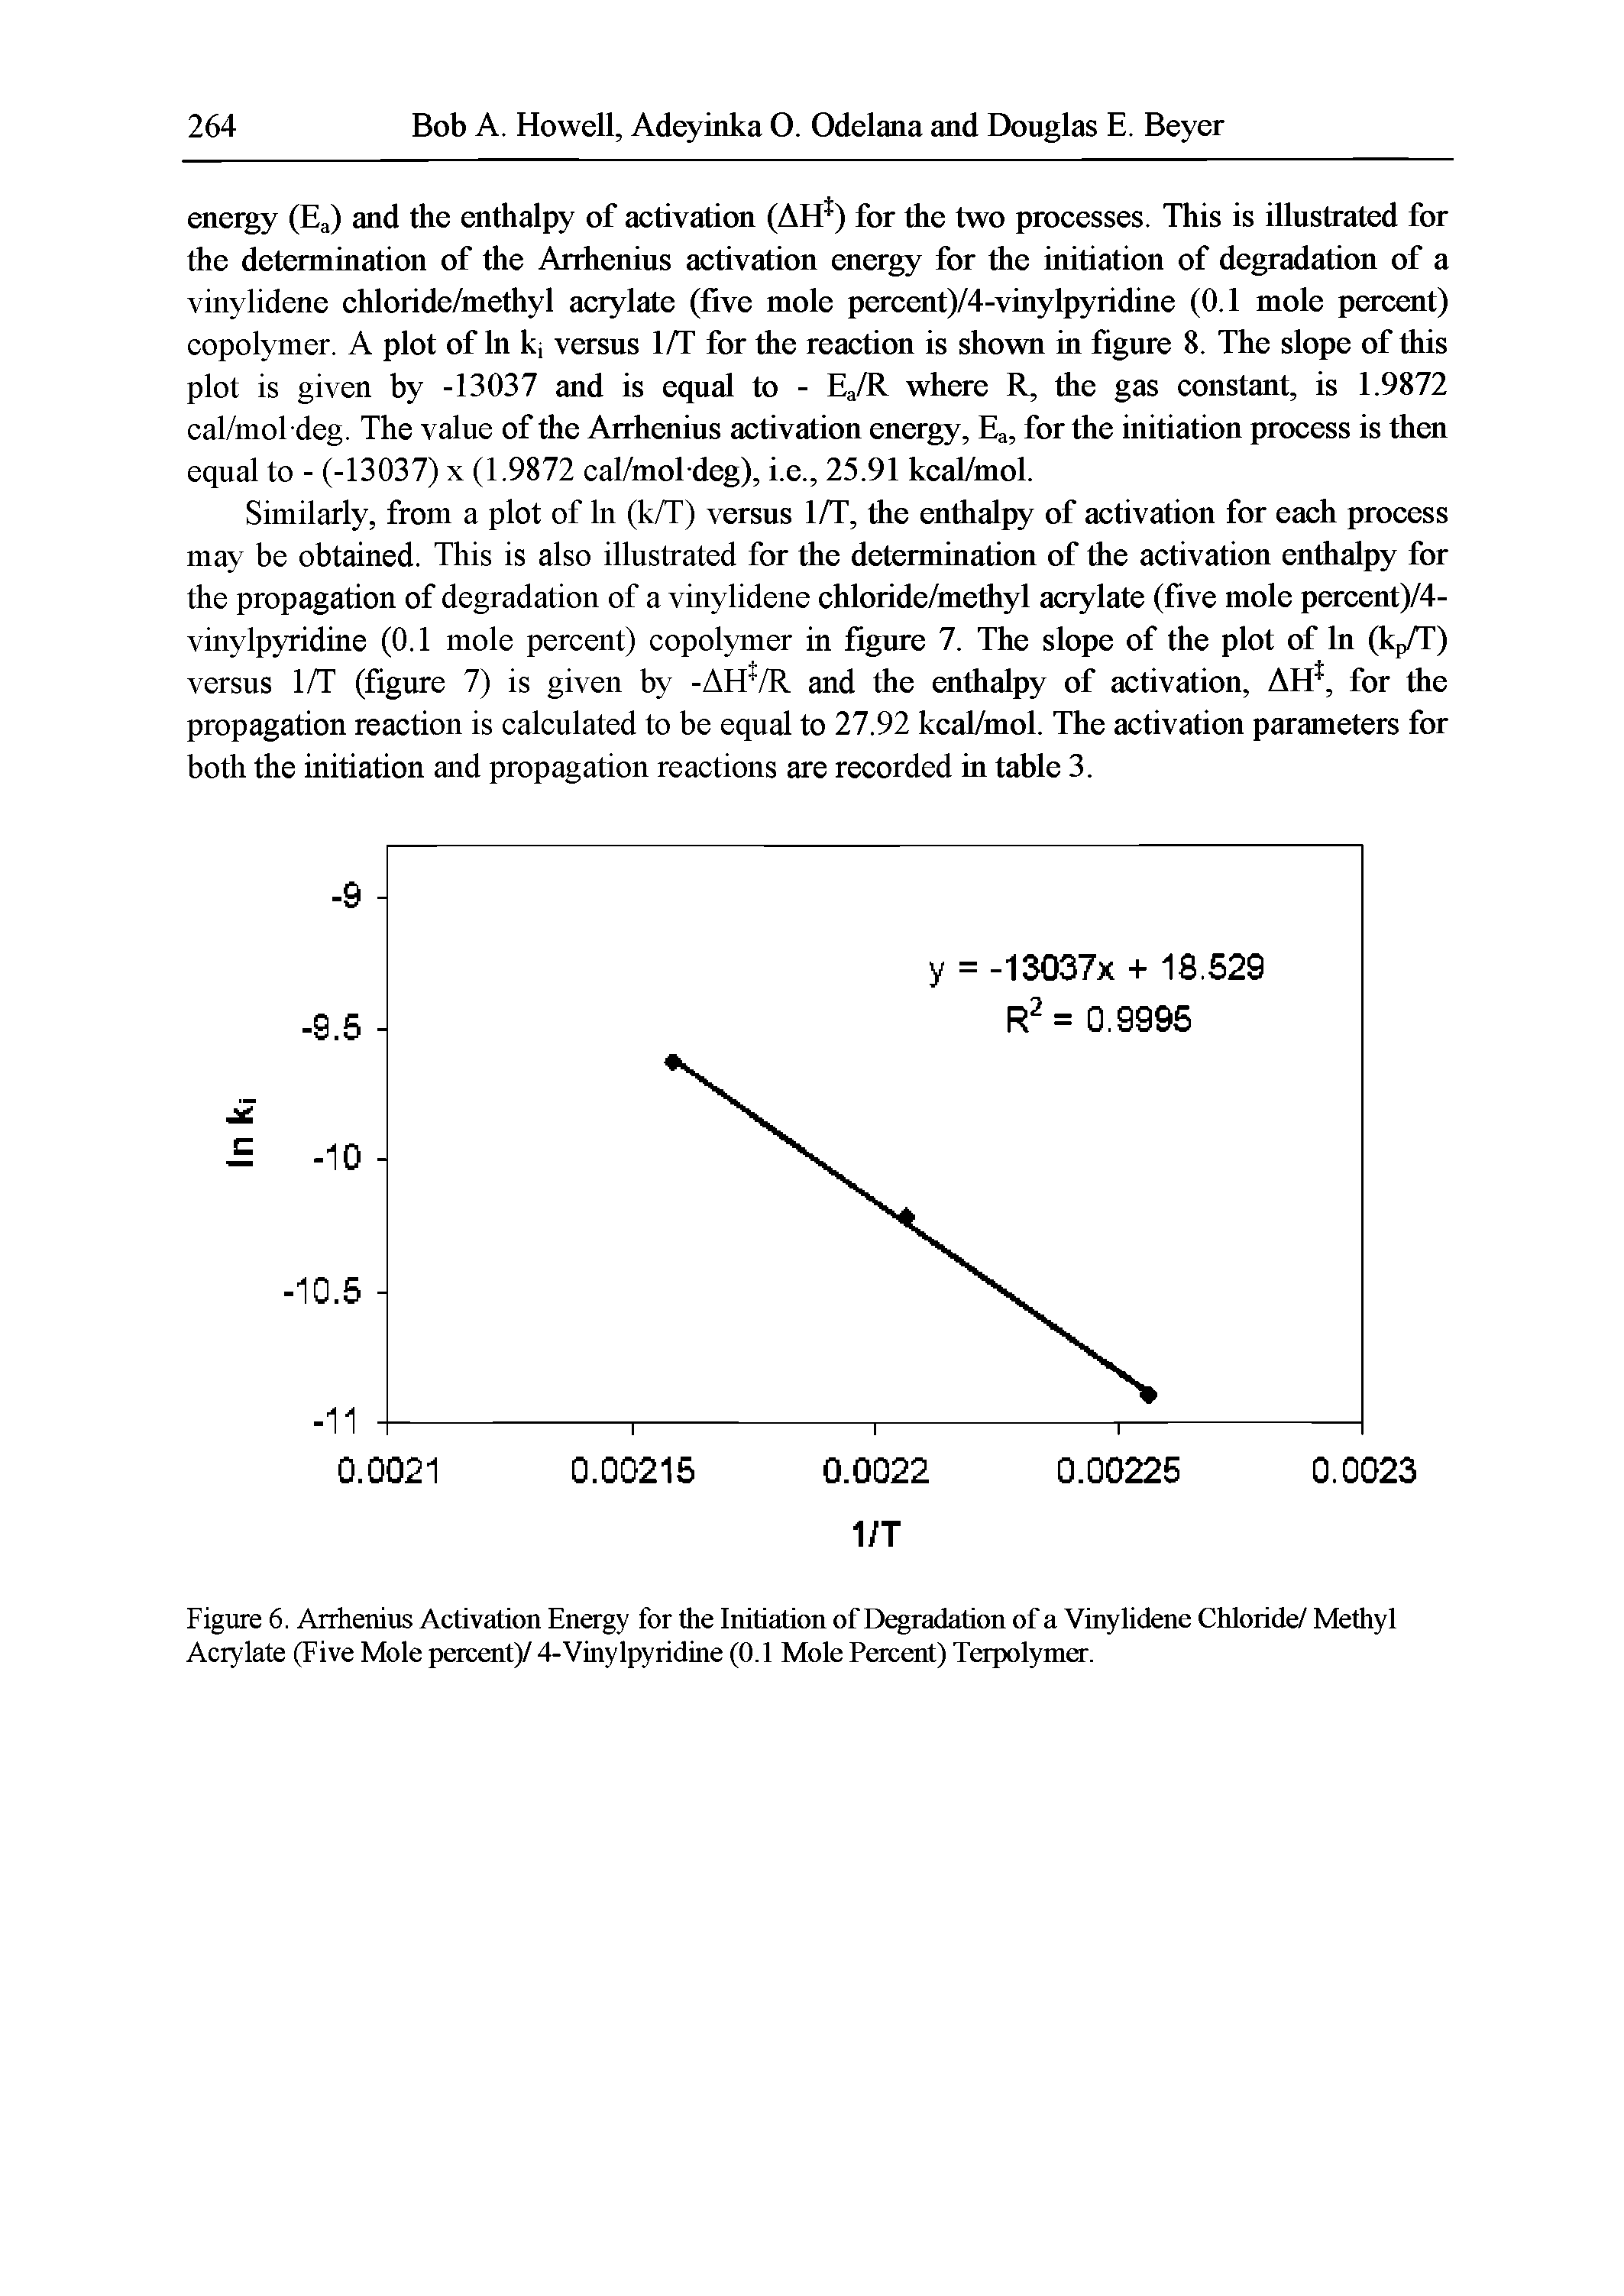 Figure 6. Arrhenius Activation Energy for the Initiation of Degradation of a Vinylidene Chloride/ Methyl Acrylate (Five Mole percent)/ 4-Vinylpyridine (0.1 Mole Percent) Terpolymer.